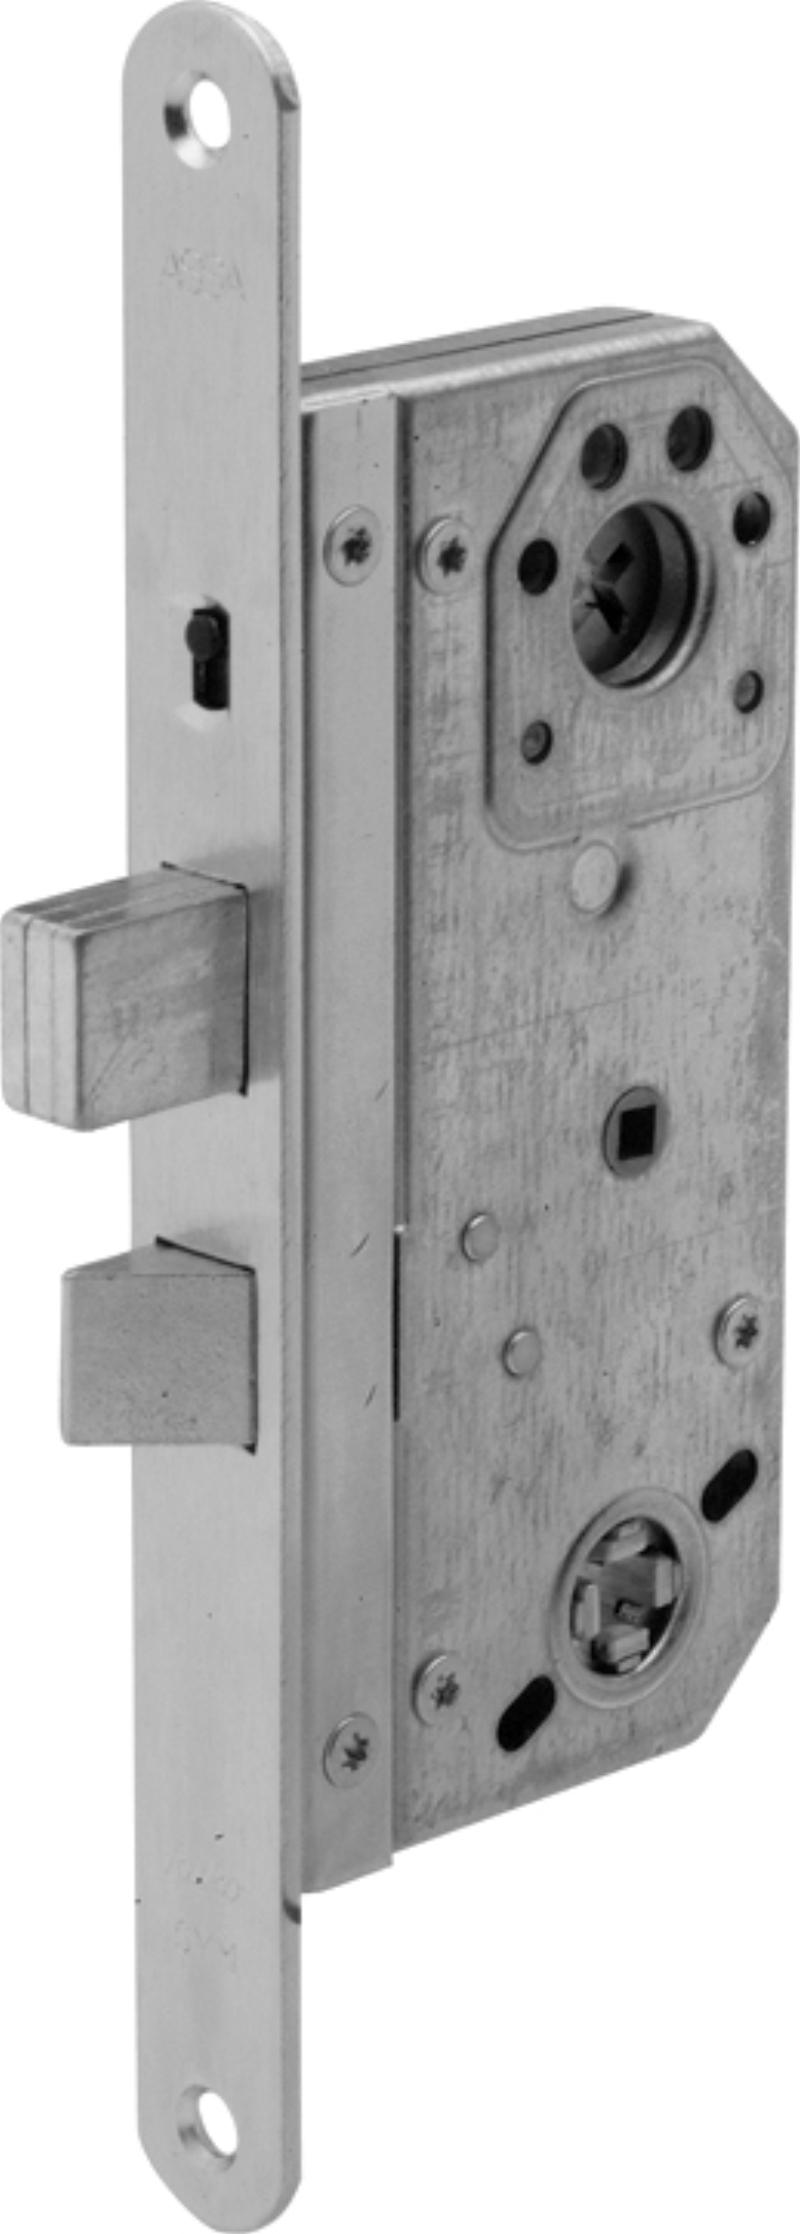 Assa lock case 2000 u/tin